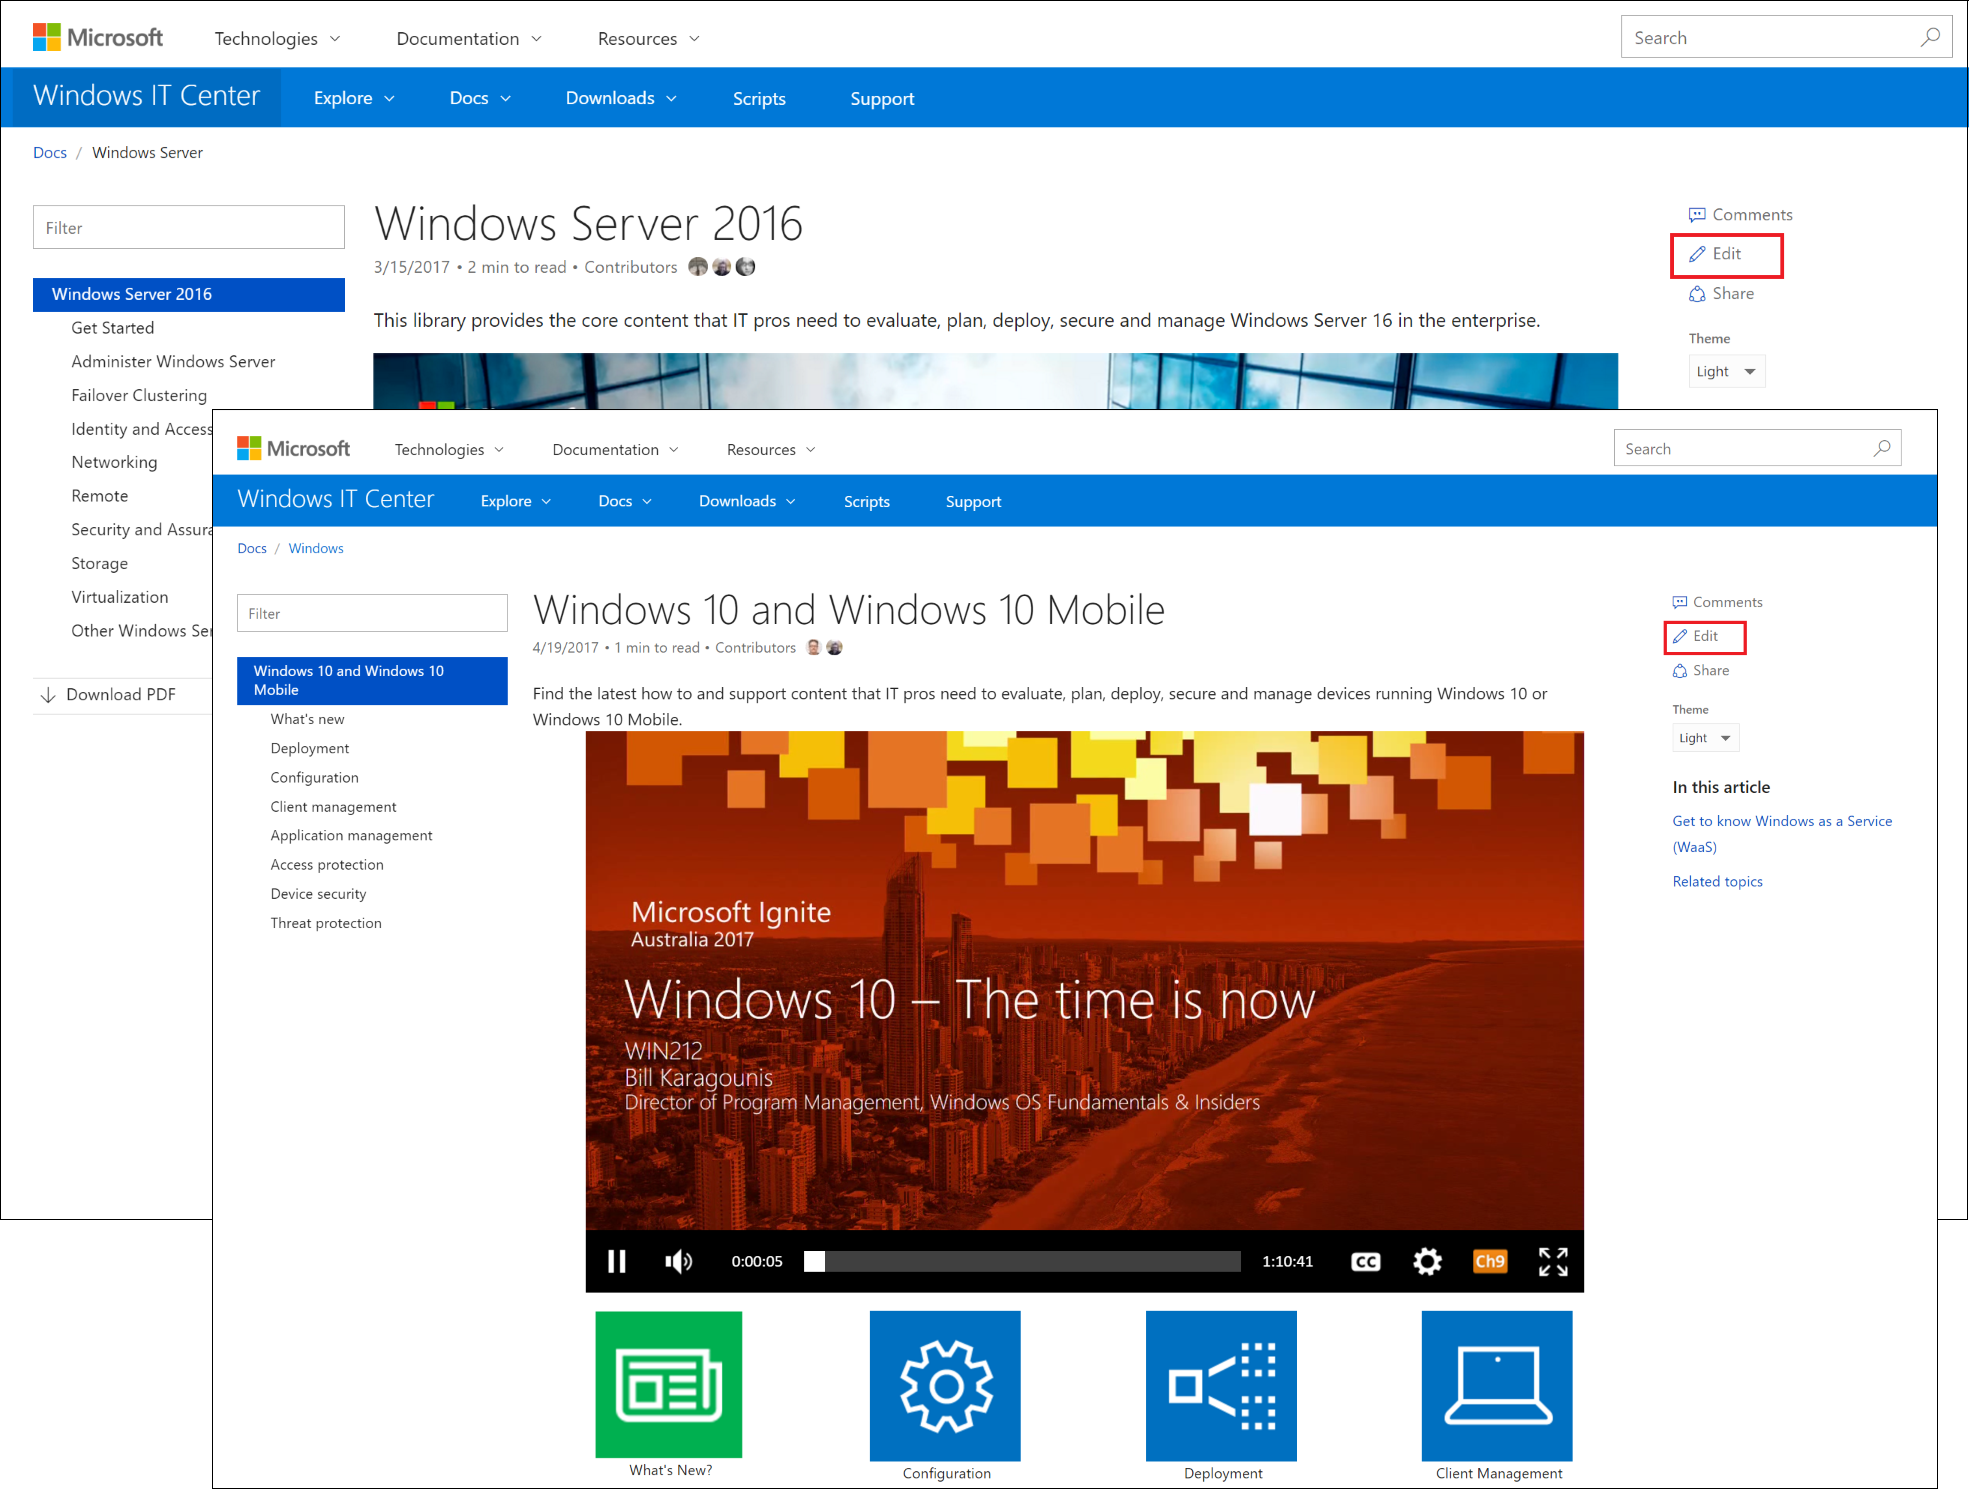 Landing Page für Windows 10, Windows 10 Mobile sowie Windows Server 2016 auf docs.microsoft.com